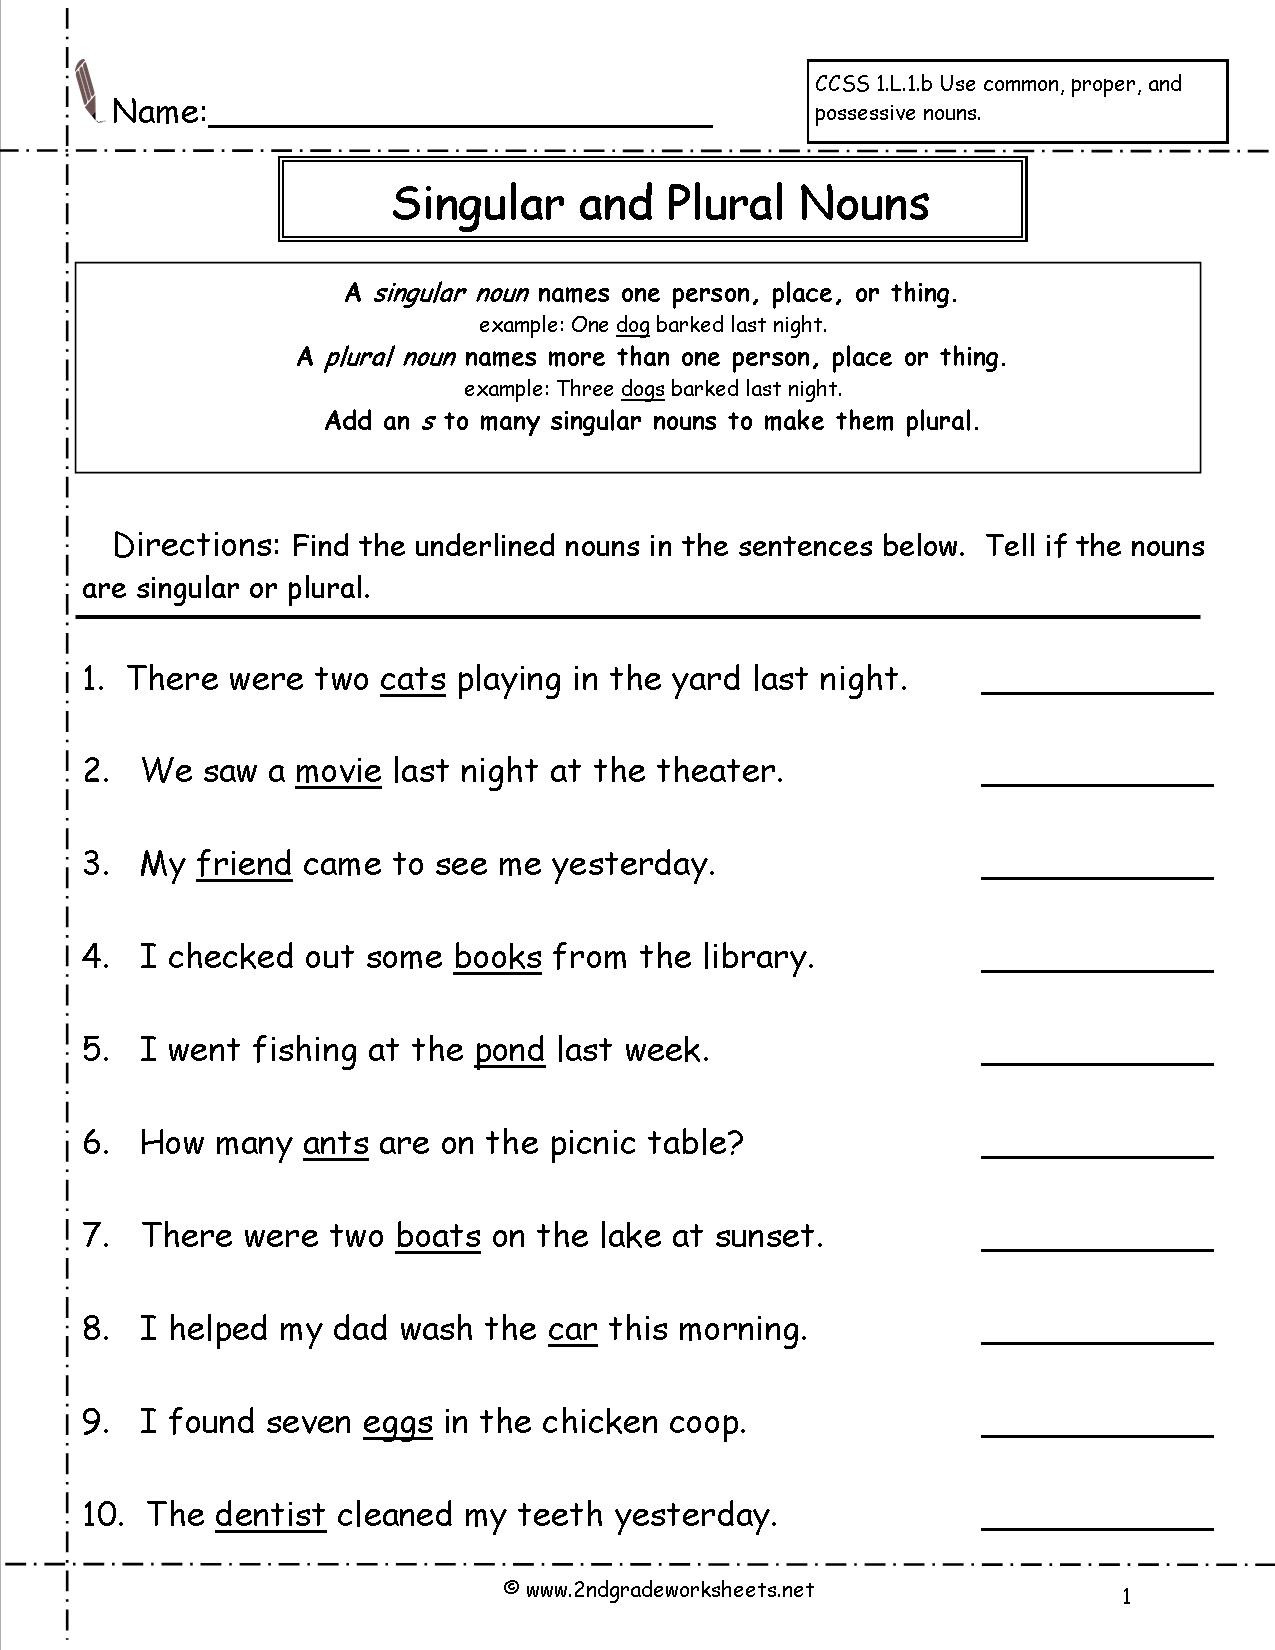 Plural Nouns Worksheet 5th Grade Singular and Plural Nouns Worksheets